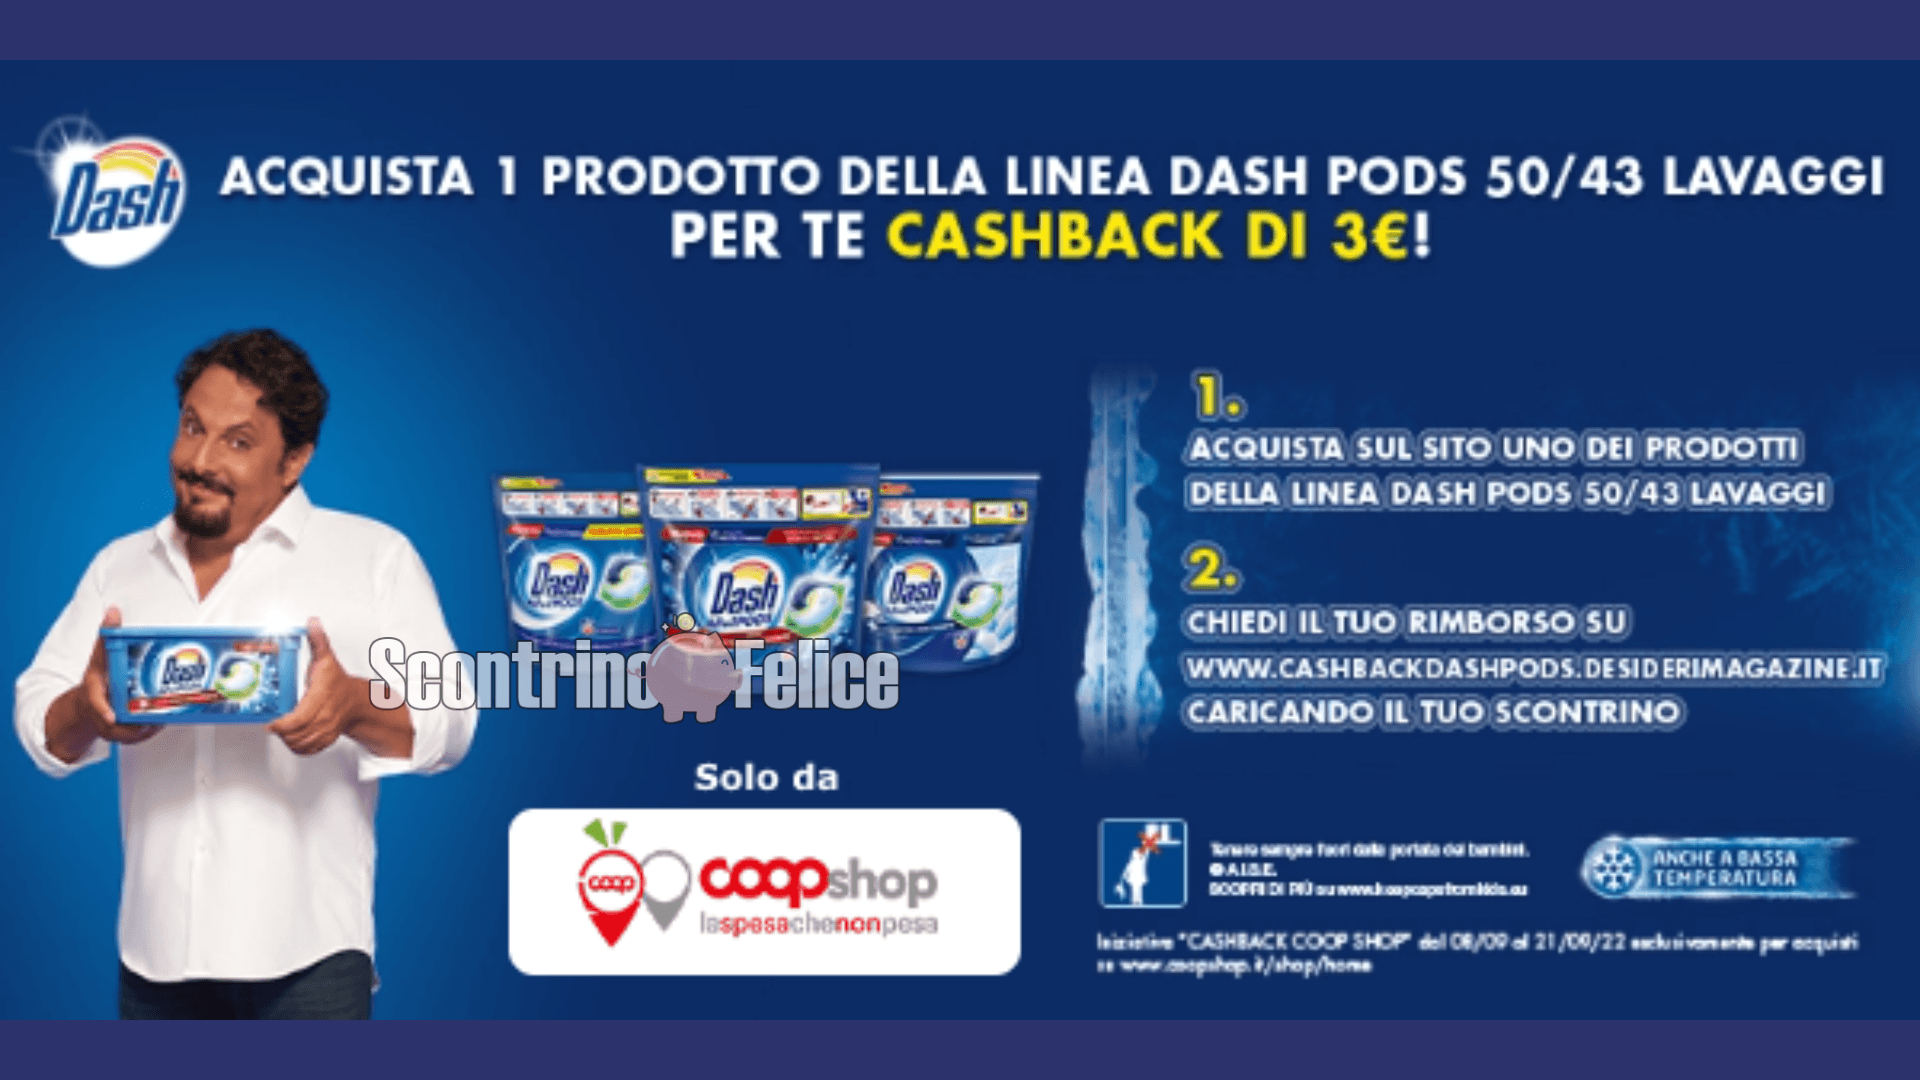 Cashback Dash Pods online su Coop Shop: ricevi un rimborso di 3 euro 2